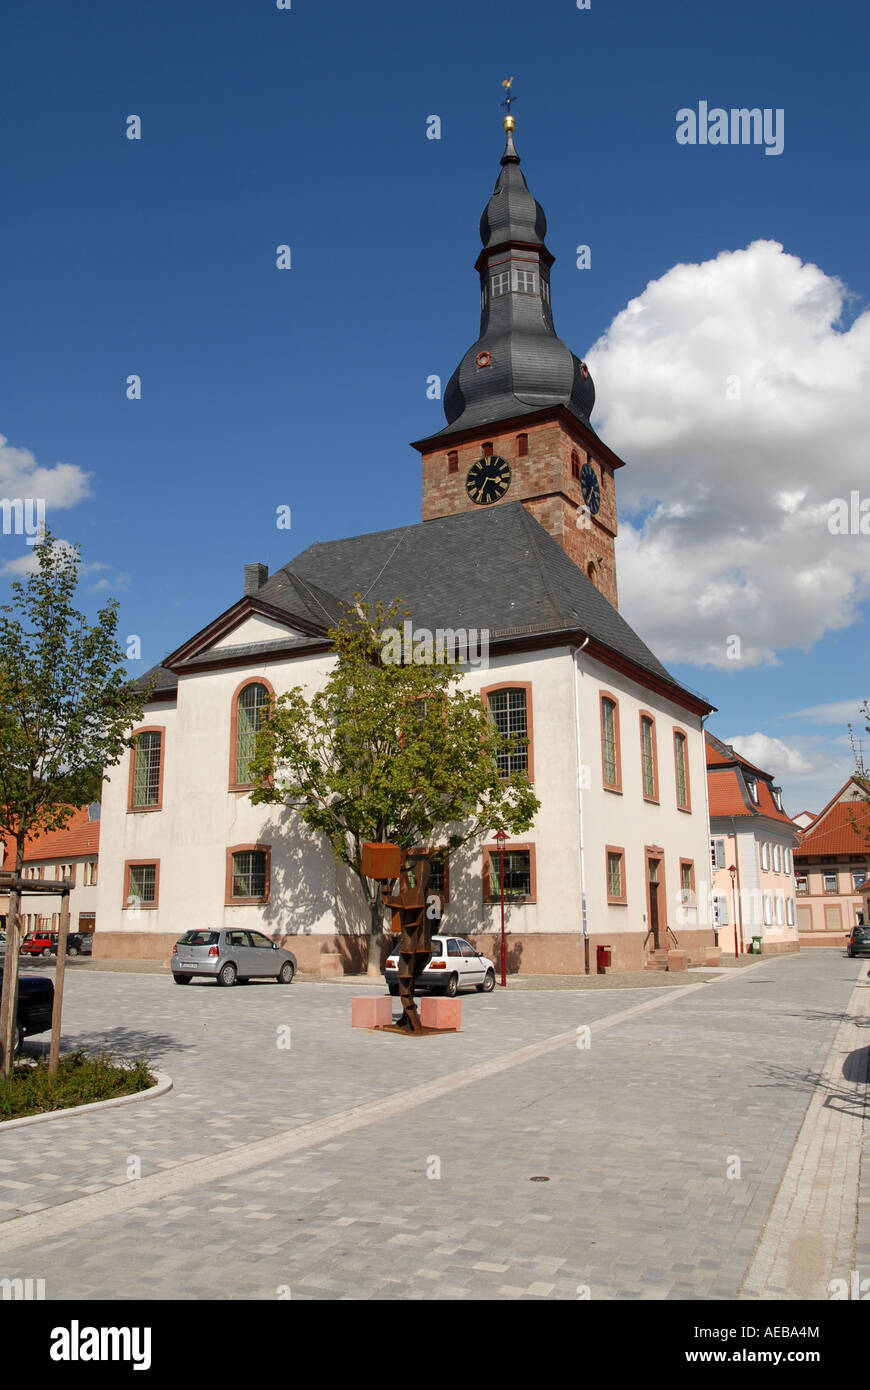 Church in Göllheim, Rheinland-Pfalz, Germany (old town) Stock Photo